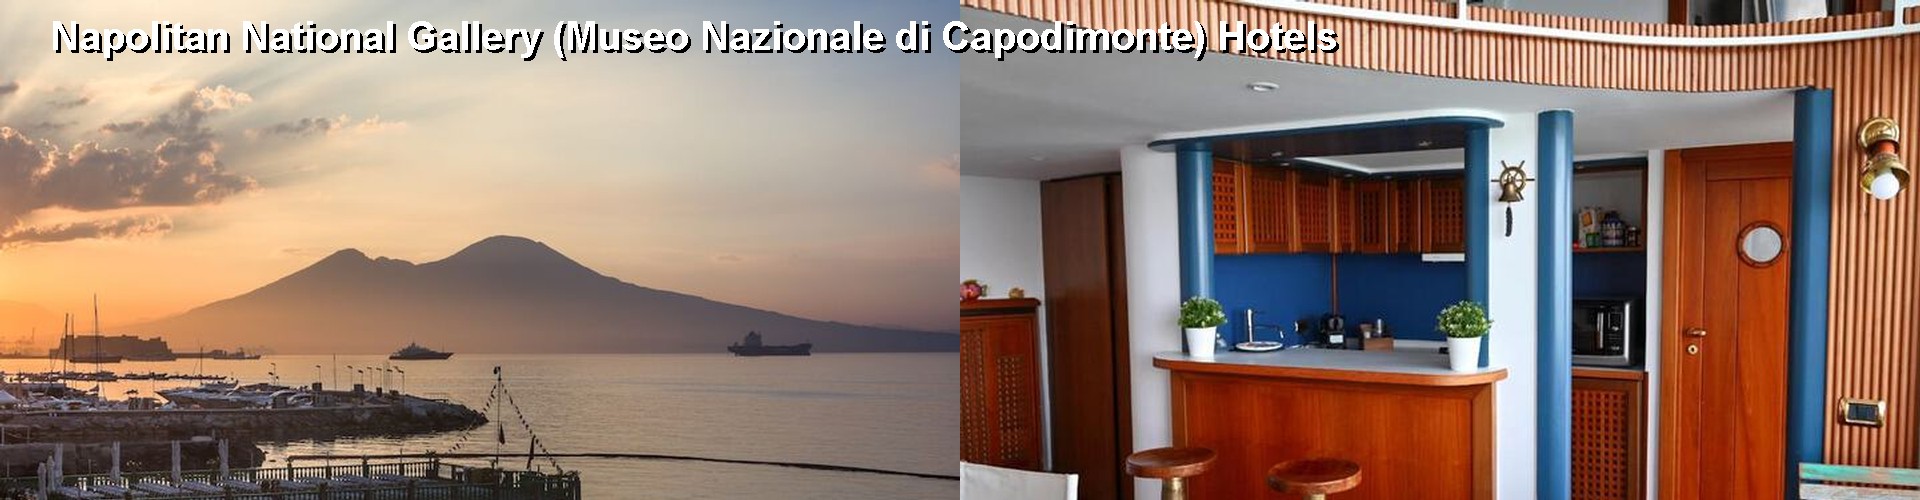 4 Best Hotels near Napolitan National Gallery (Museo Nazionale di Capodimonte)